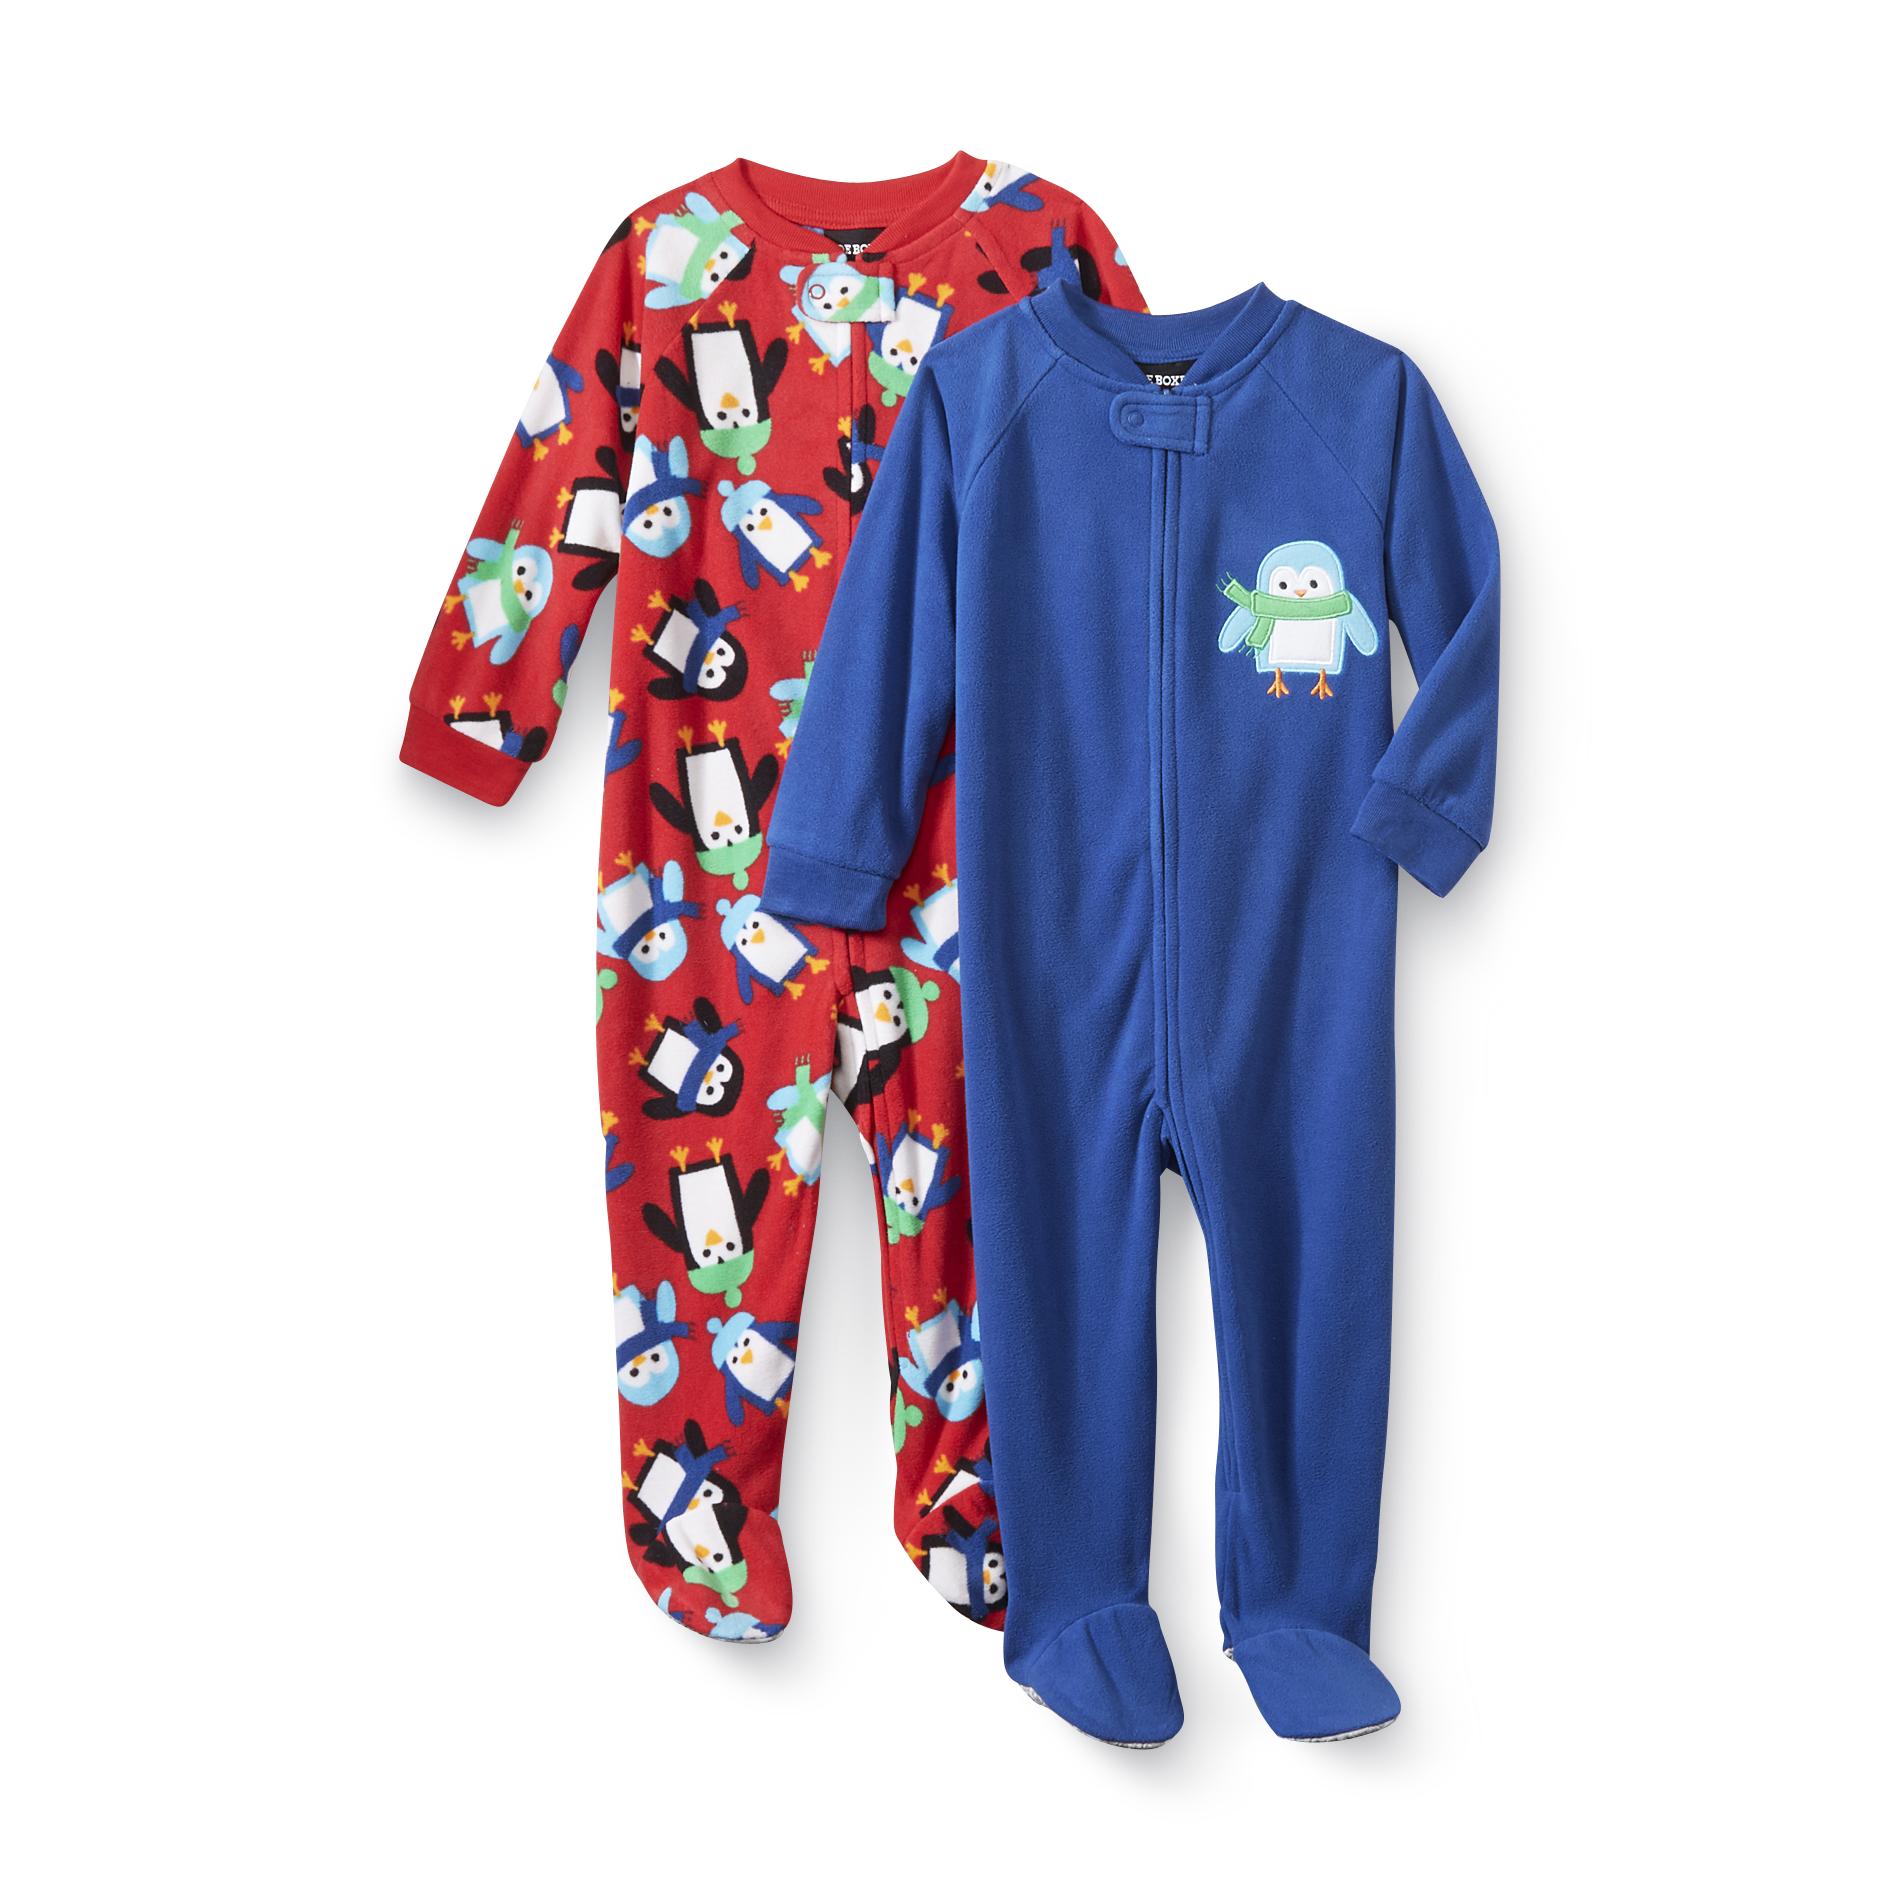 Joe Boxer Newborn  Infant & Toddler Boy's 2-Pack Fleece Sleeper Pajamas - Penguin